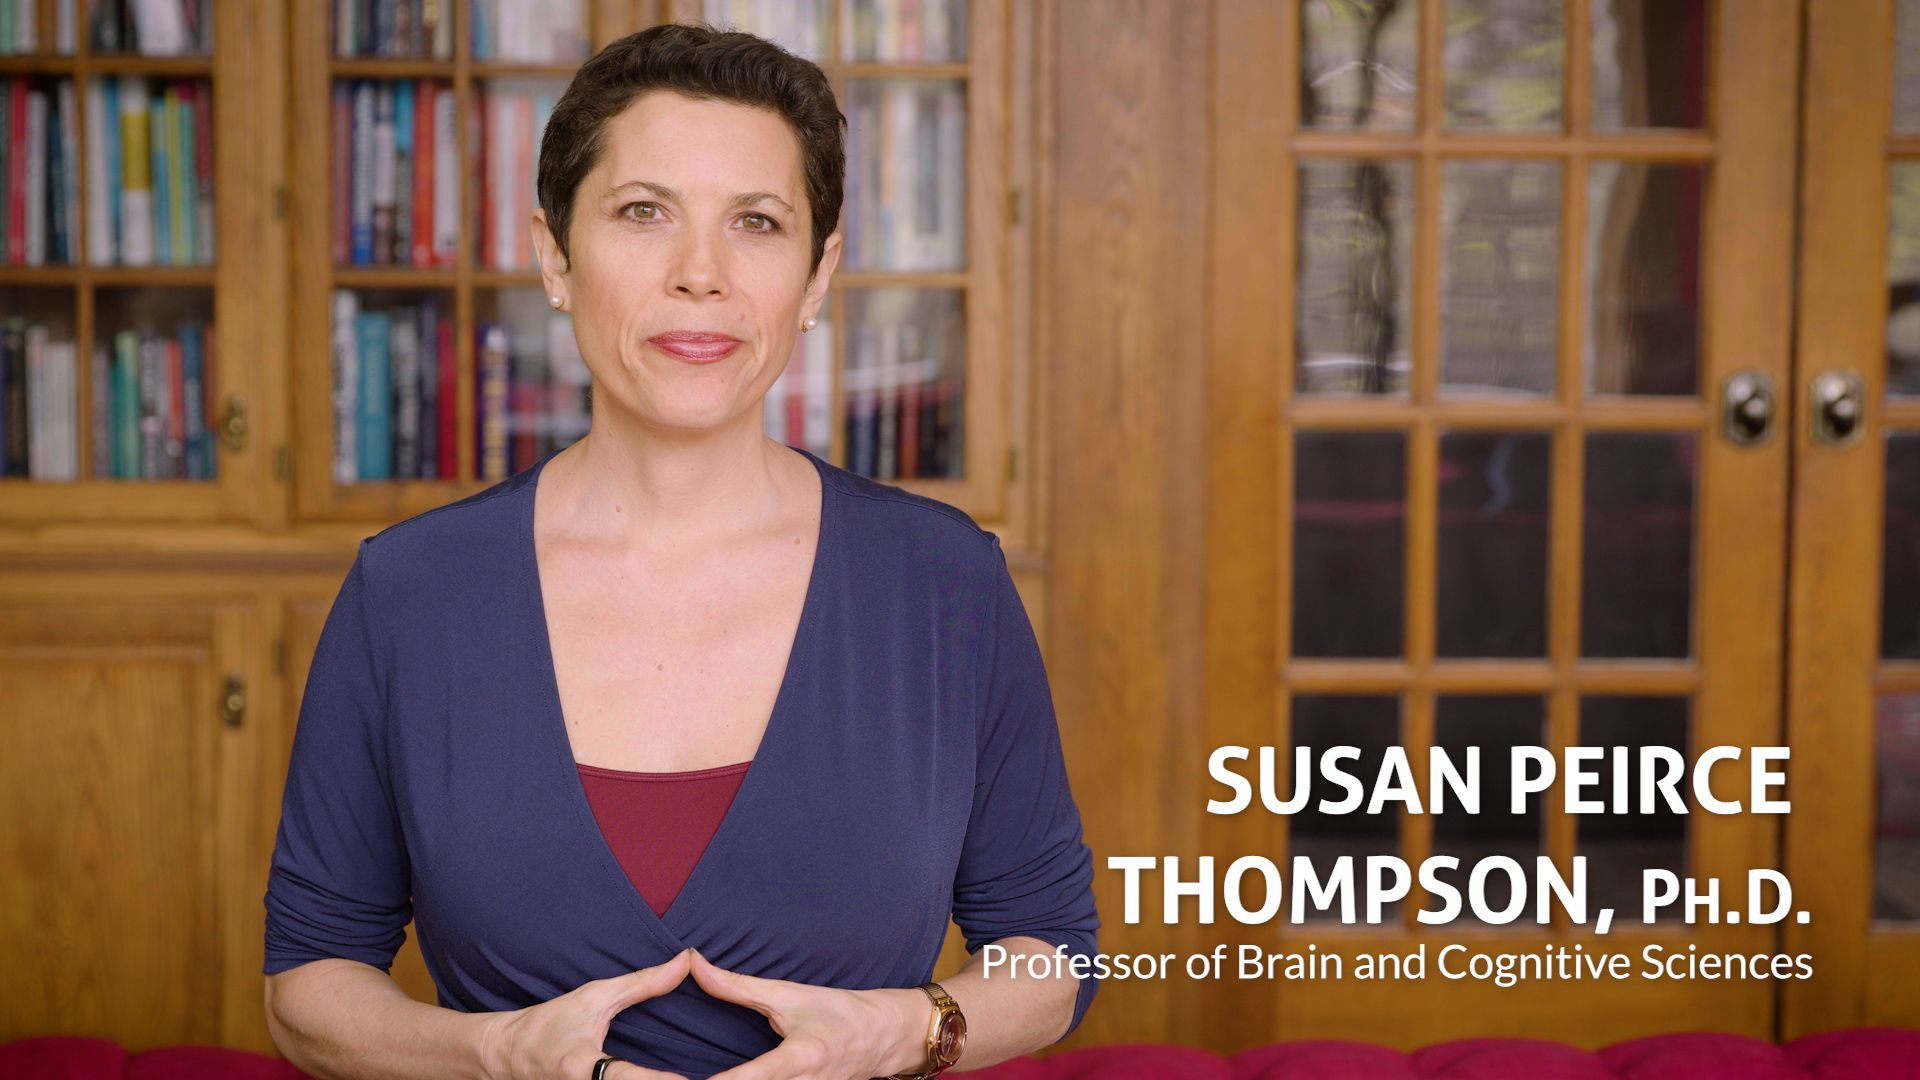 Dr. Susan Peirce Thompson